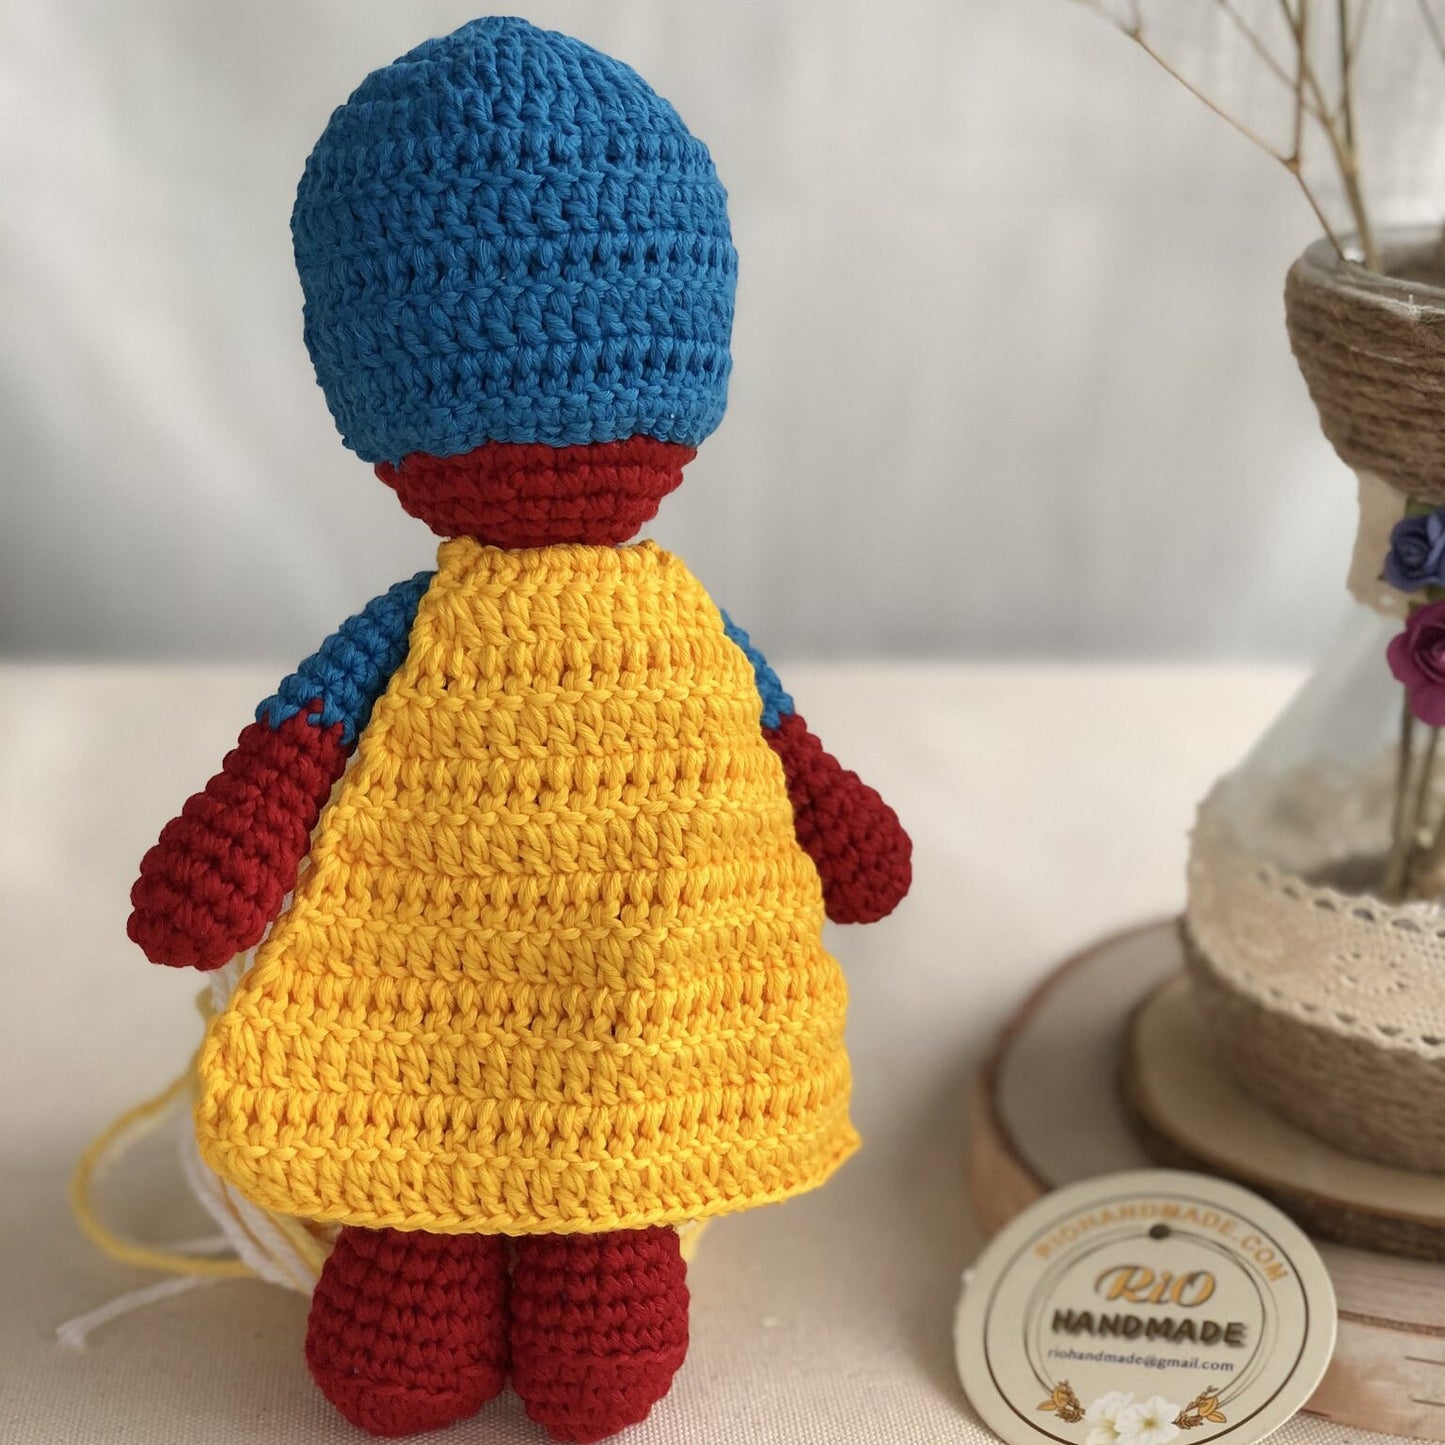 Handmade yarn cotton animator Wanda Vision inspired crochet, amigurumi, plushie, cute, soft toy for baby, toddler, kid, adult hobby